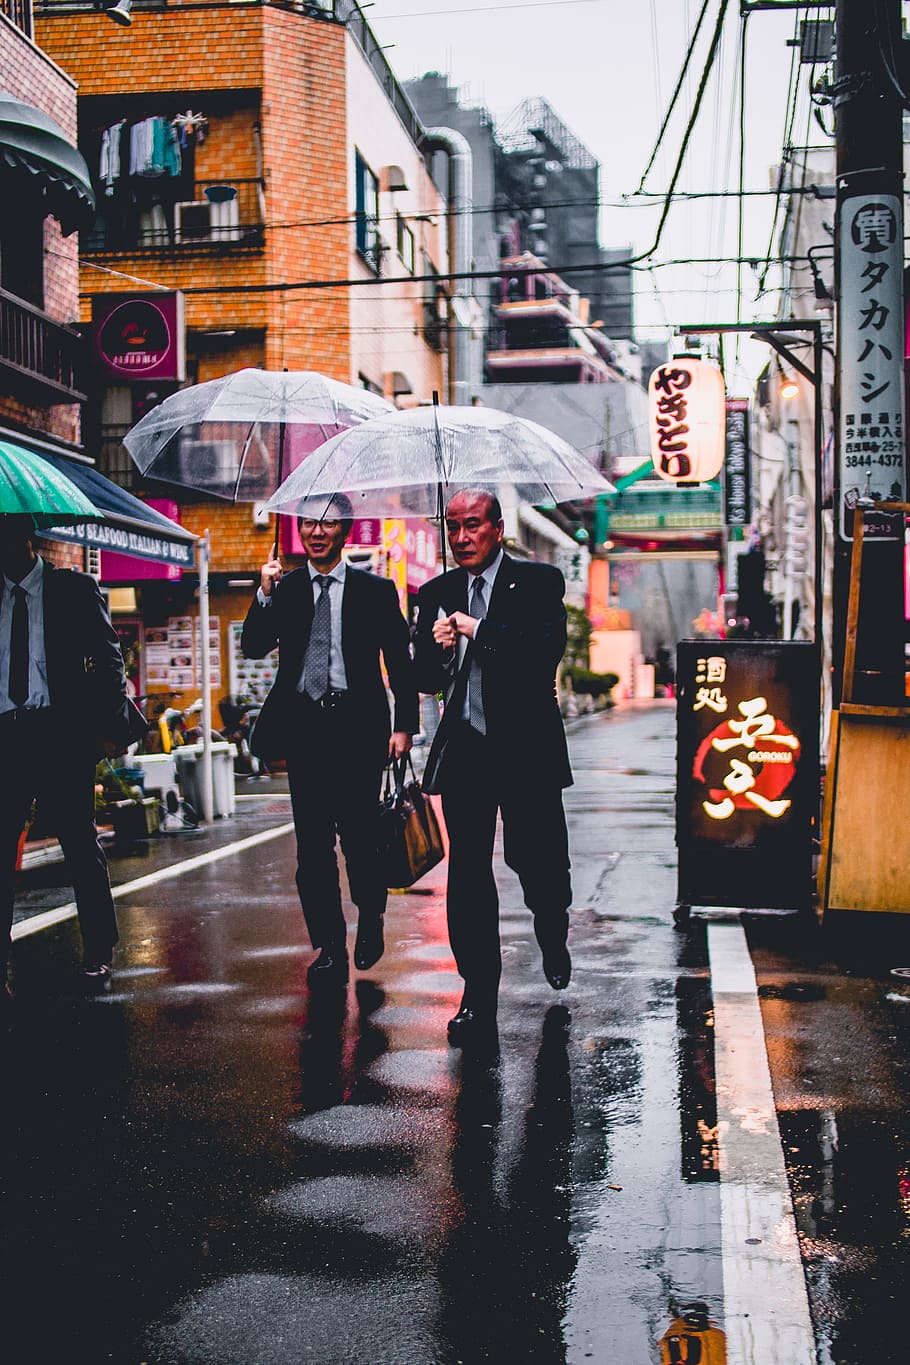 two men in black suit holding transparent umbrellas walking in the street, three man wearing black suits holding umbrella walking on street